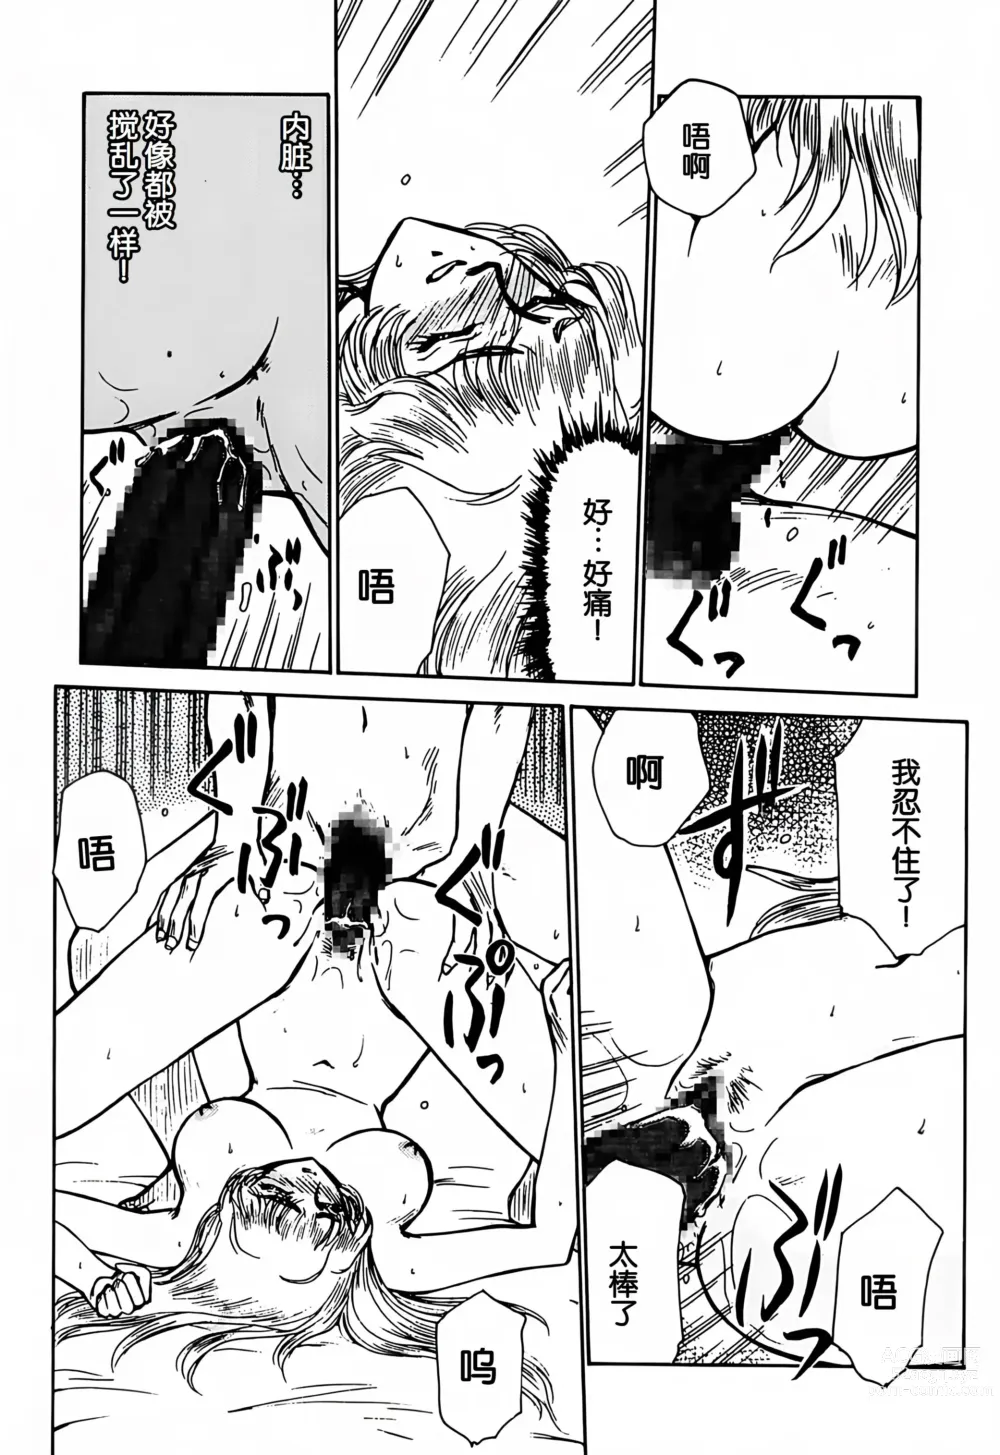 Page 55 of doujinshi Nise DRAGON BLOOD! 1.